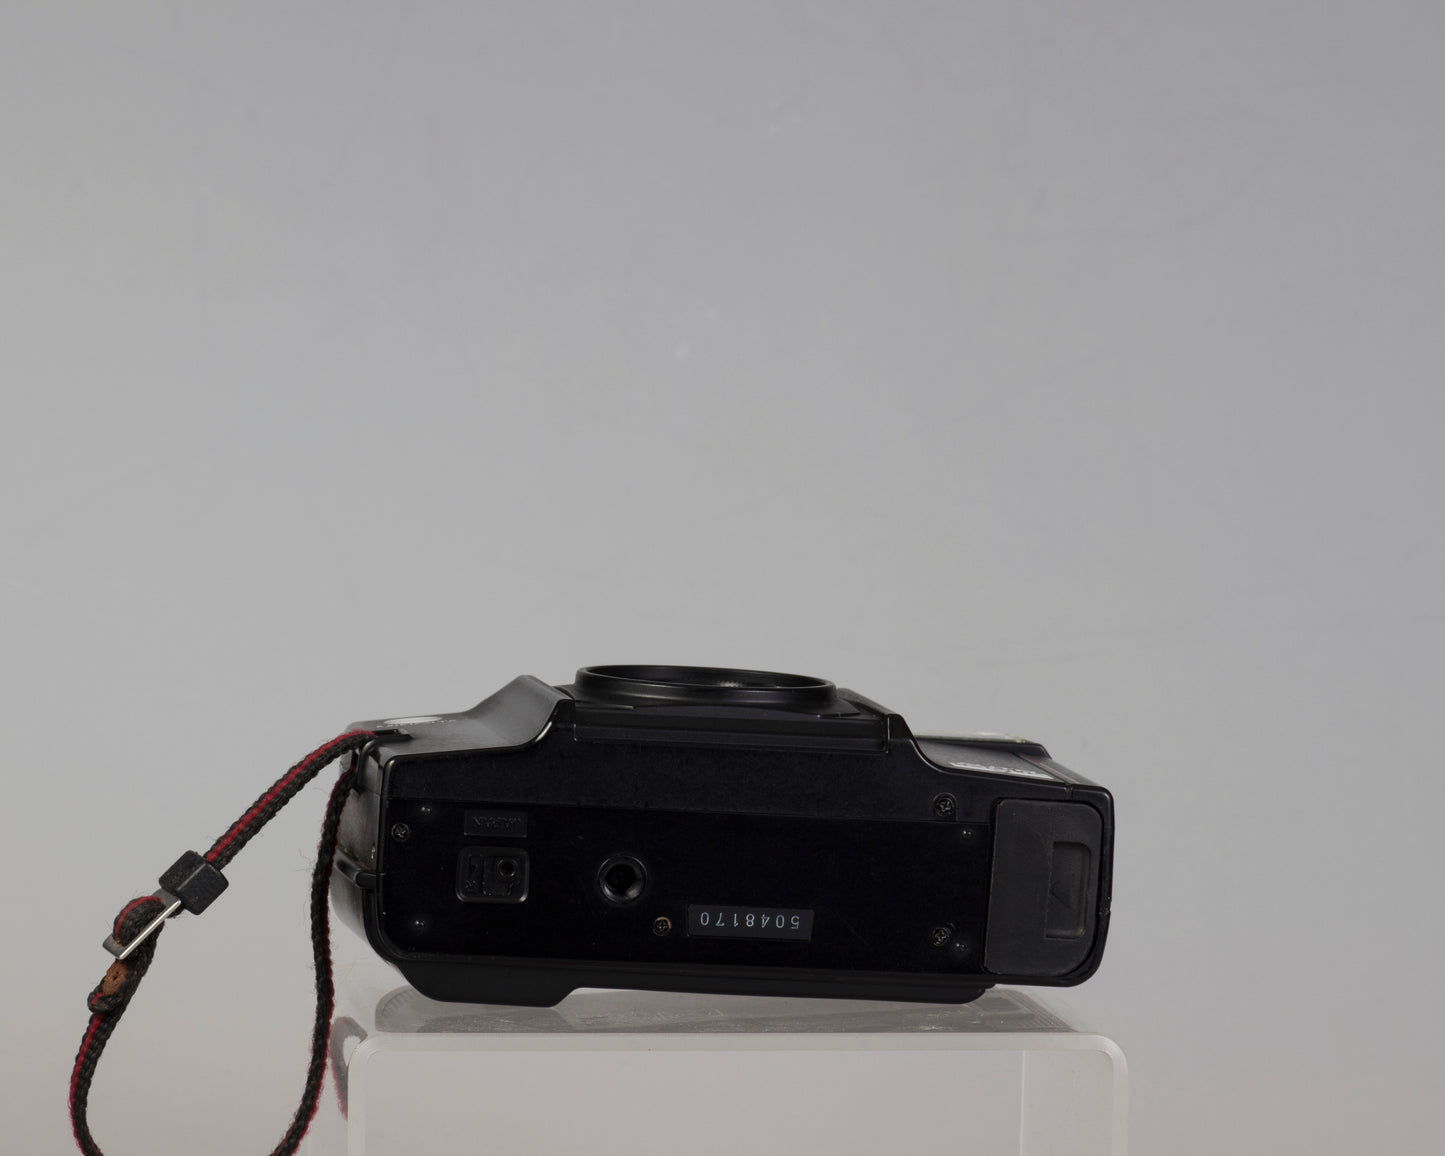 Minolta AF-S V "Talker" 35mm camera